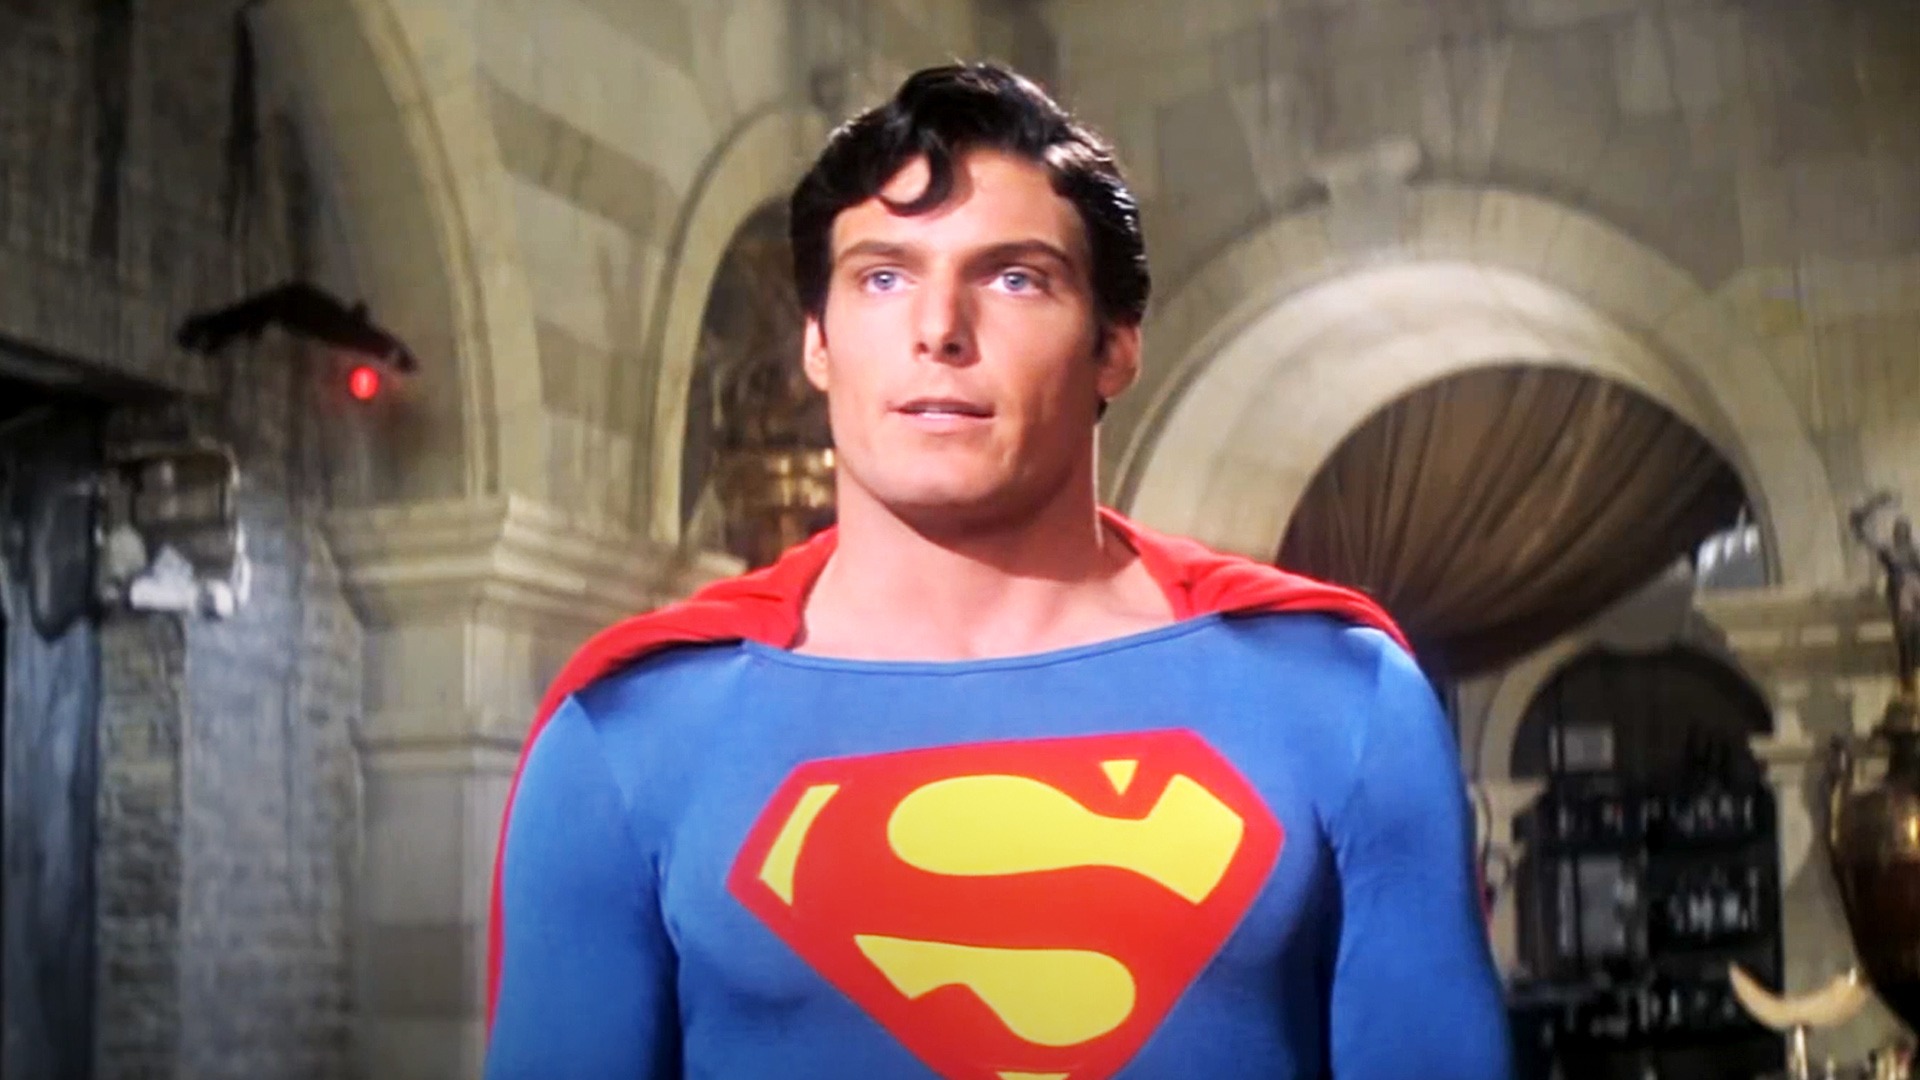 superman 1978 clark kent